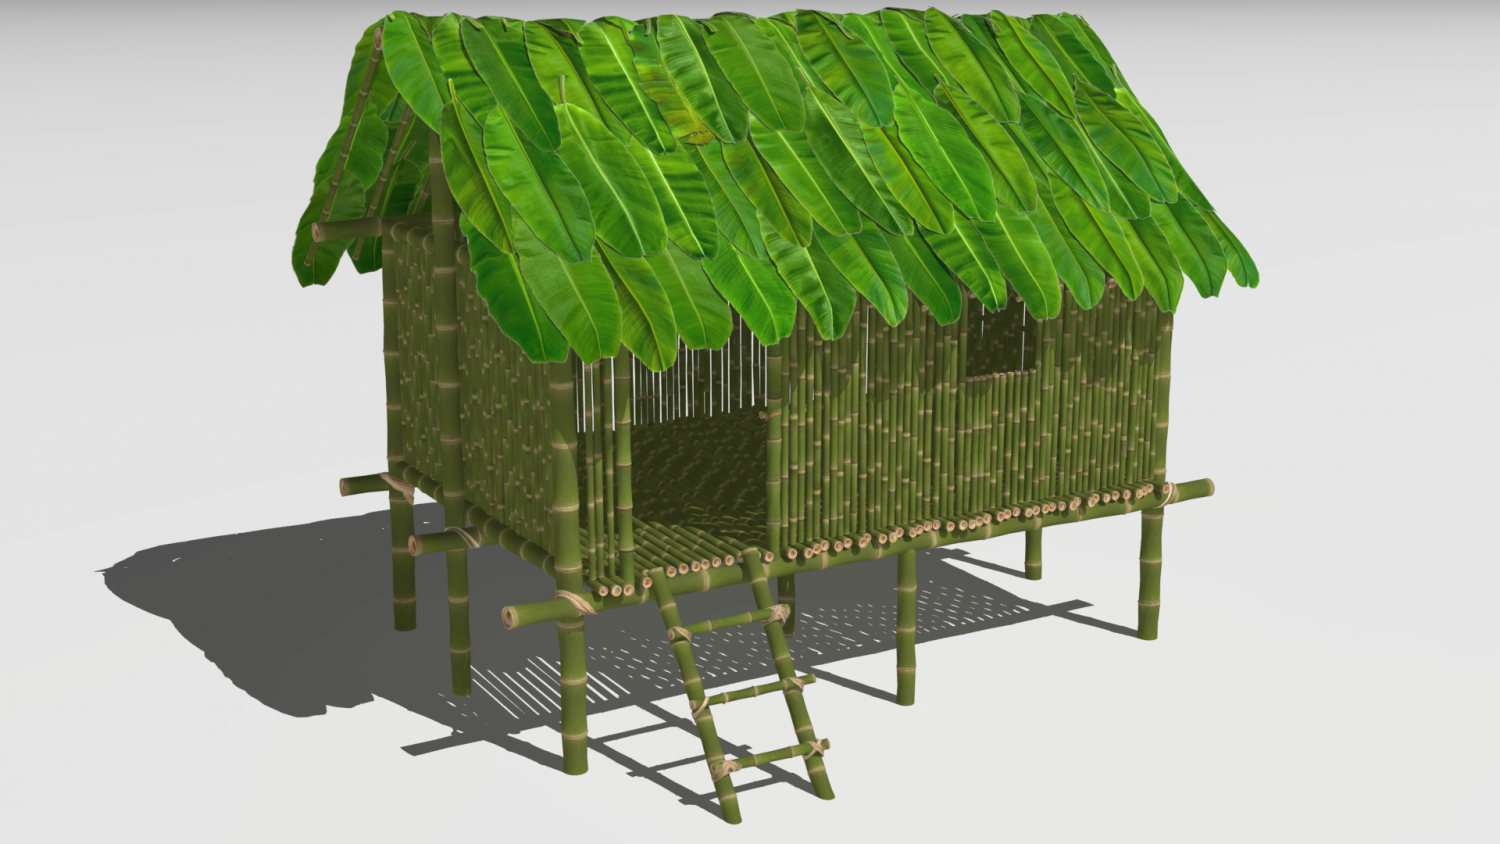 Tribal Jungle Hut - 3D Model by Enterables